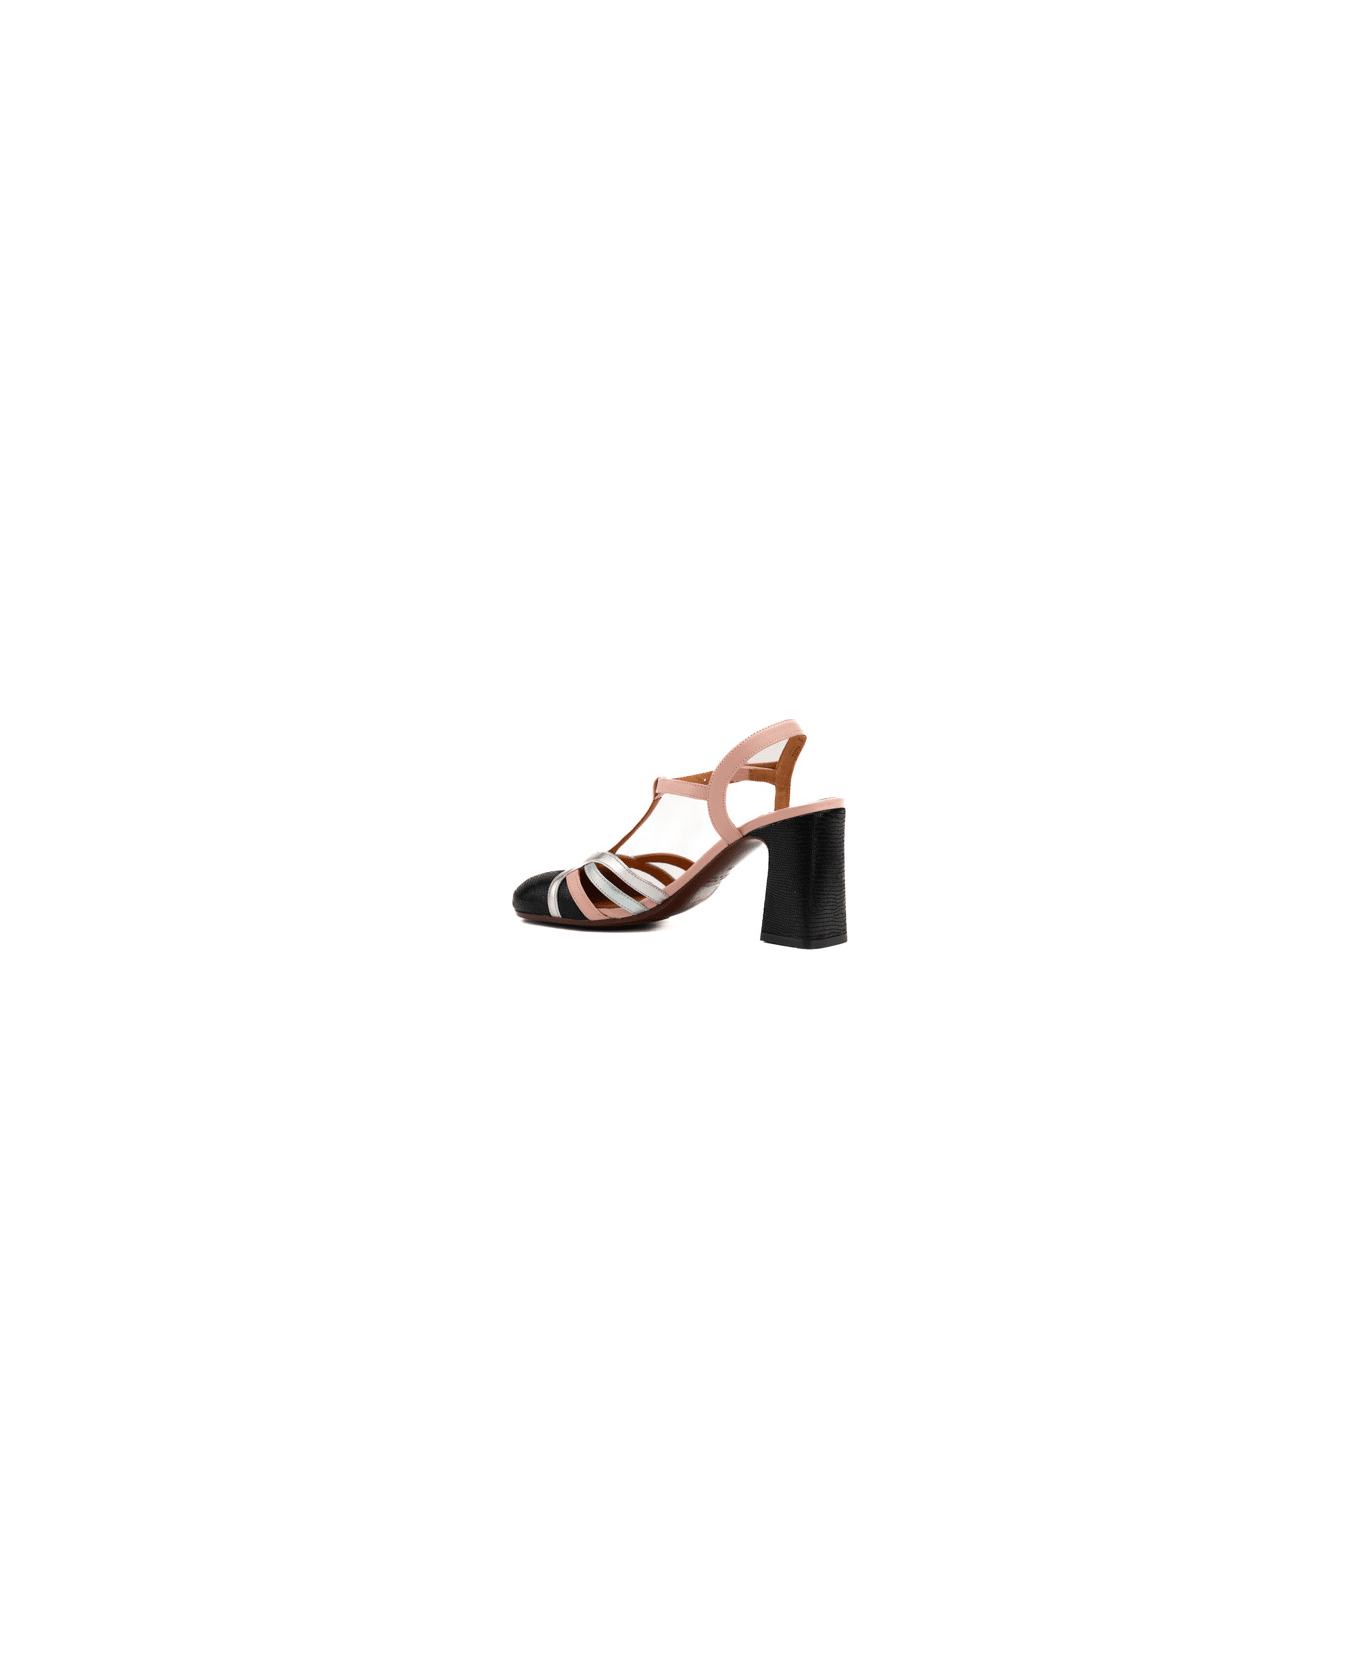 Chie Mihara Mendy Leather Sandals - Negro/pink/acqua ハイヒール